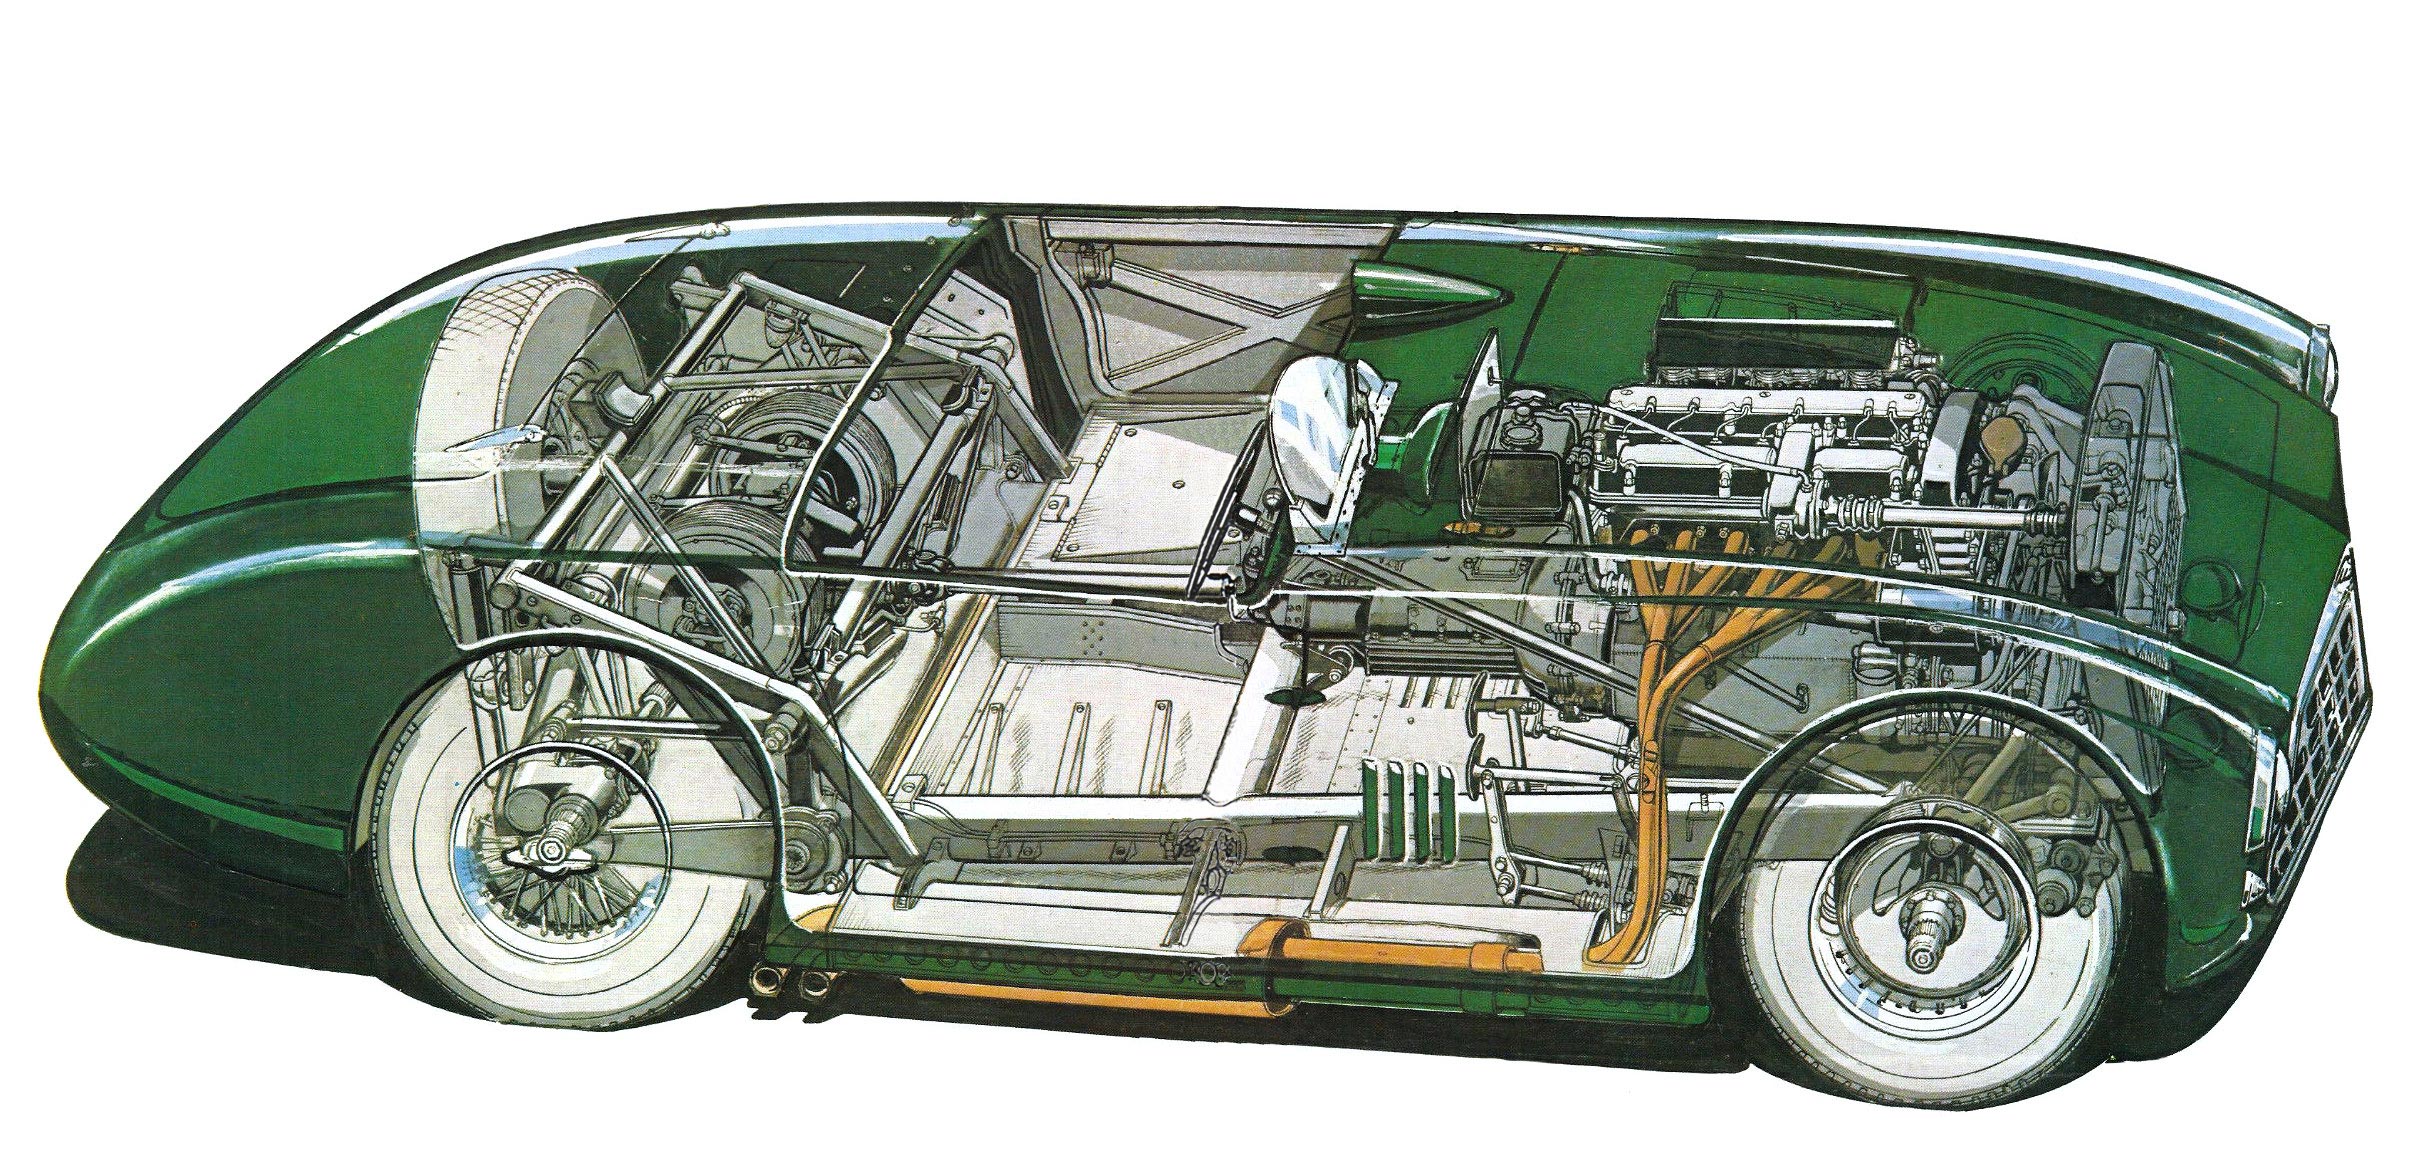 Aston Martin DB3 Spyder cutaway